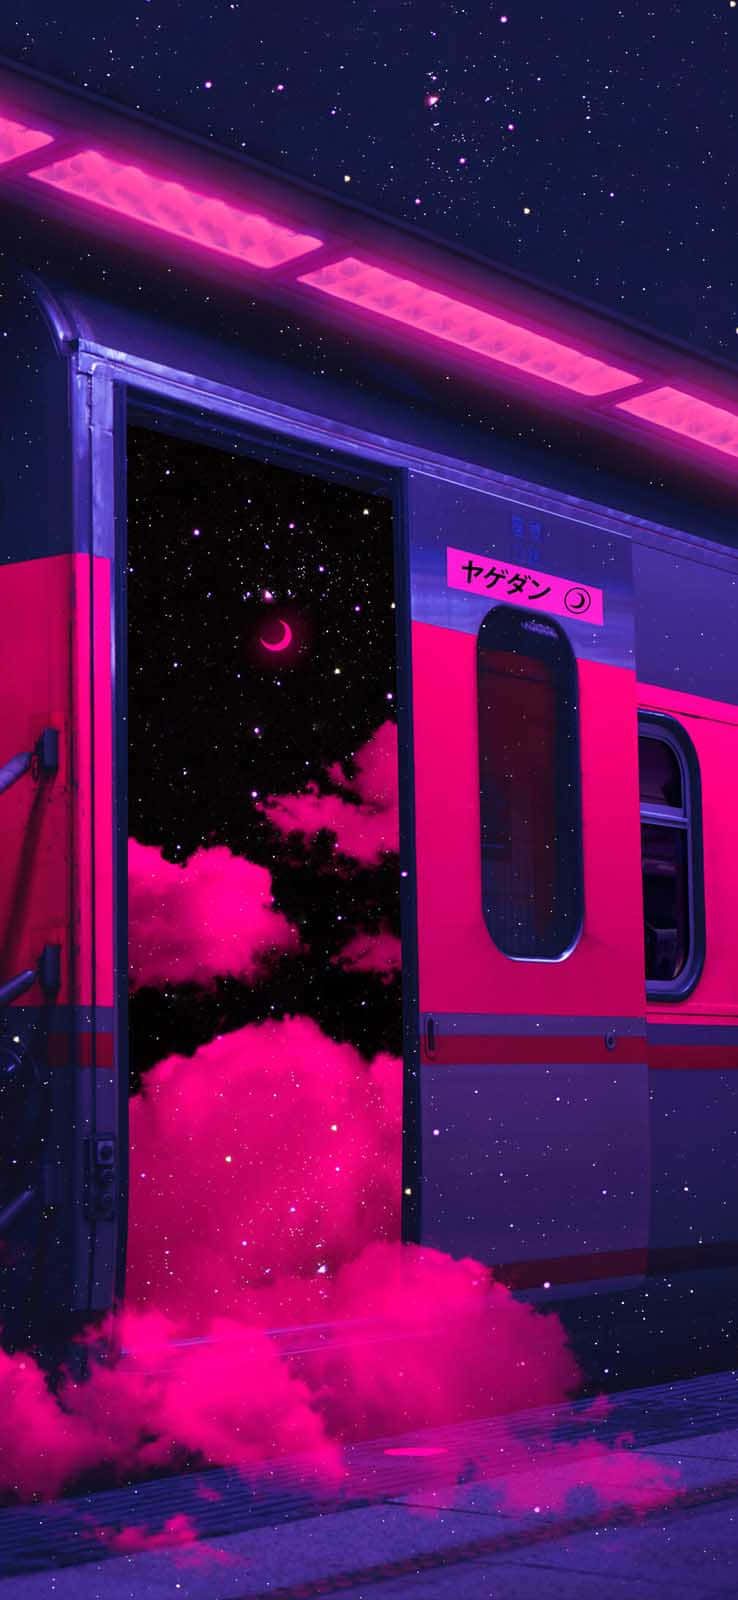 Aesthetic pink and purple train door wallpaper for phone - Magenta